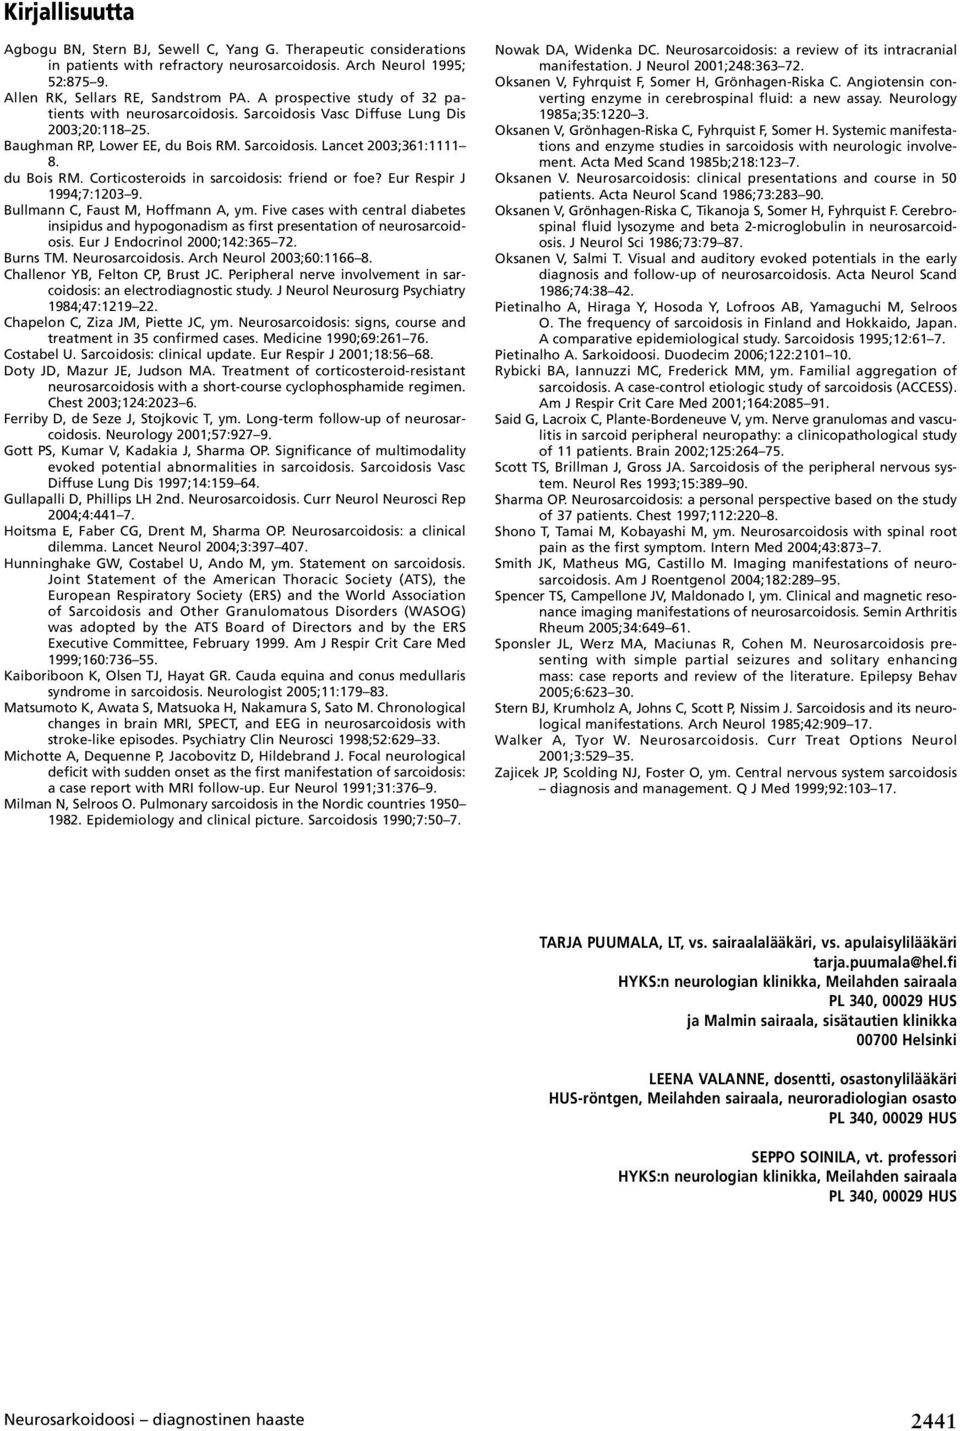 Eur Respir J 1994;7:1203 9. Bullmann C, Faust M, Hoffmann A, ym. Five cases with central diabetes insipidus and hypogonadism as first presentation of neurosarcoidosis.